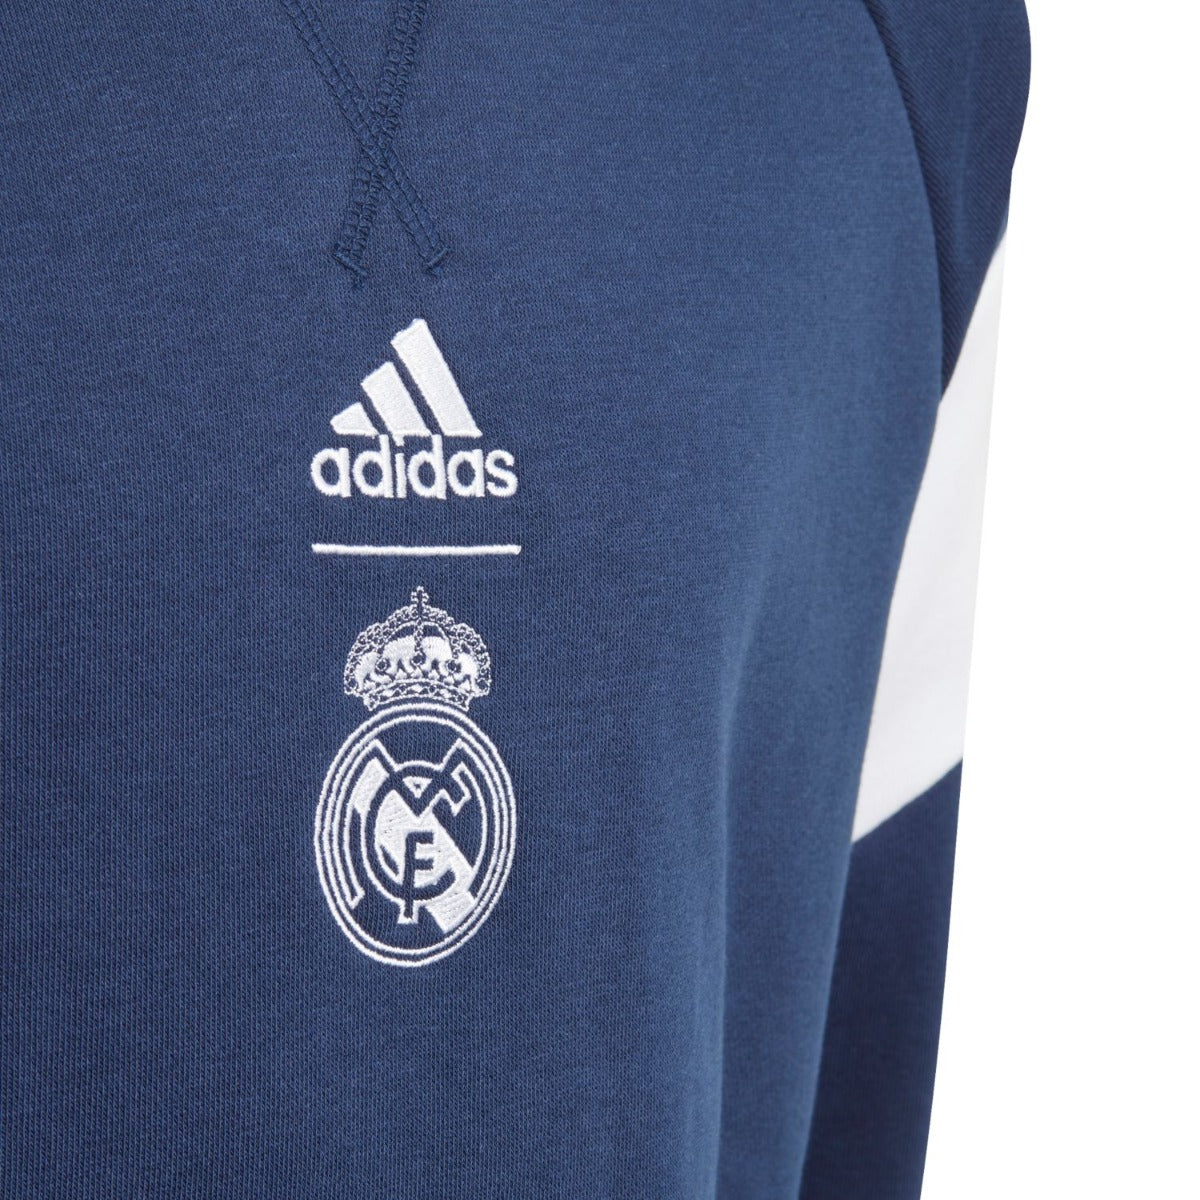 adidas 2019-20 Real Madrid YOUTH Crewneck Sweater - Navy